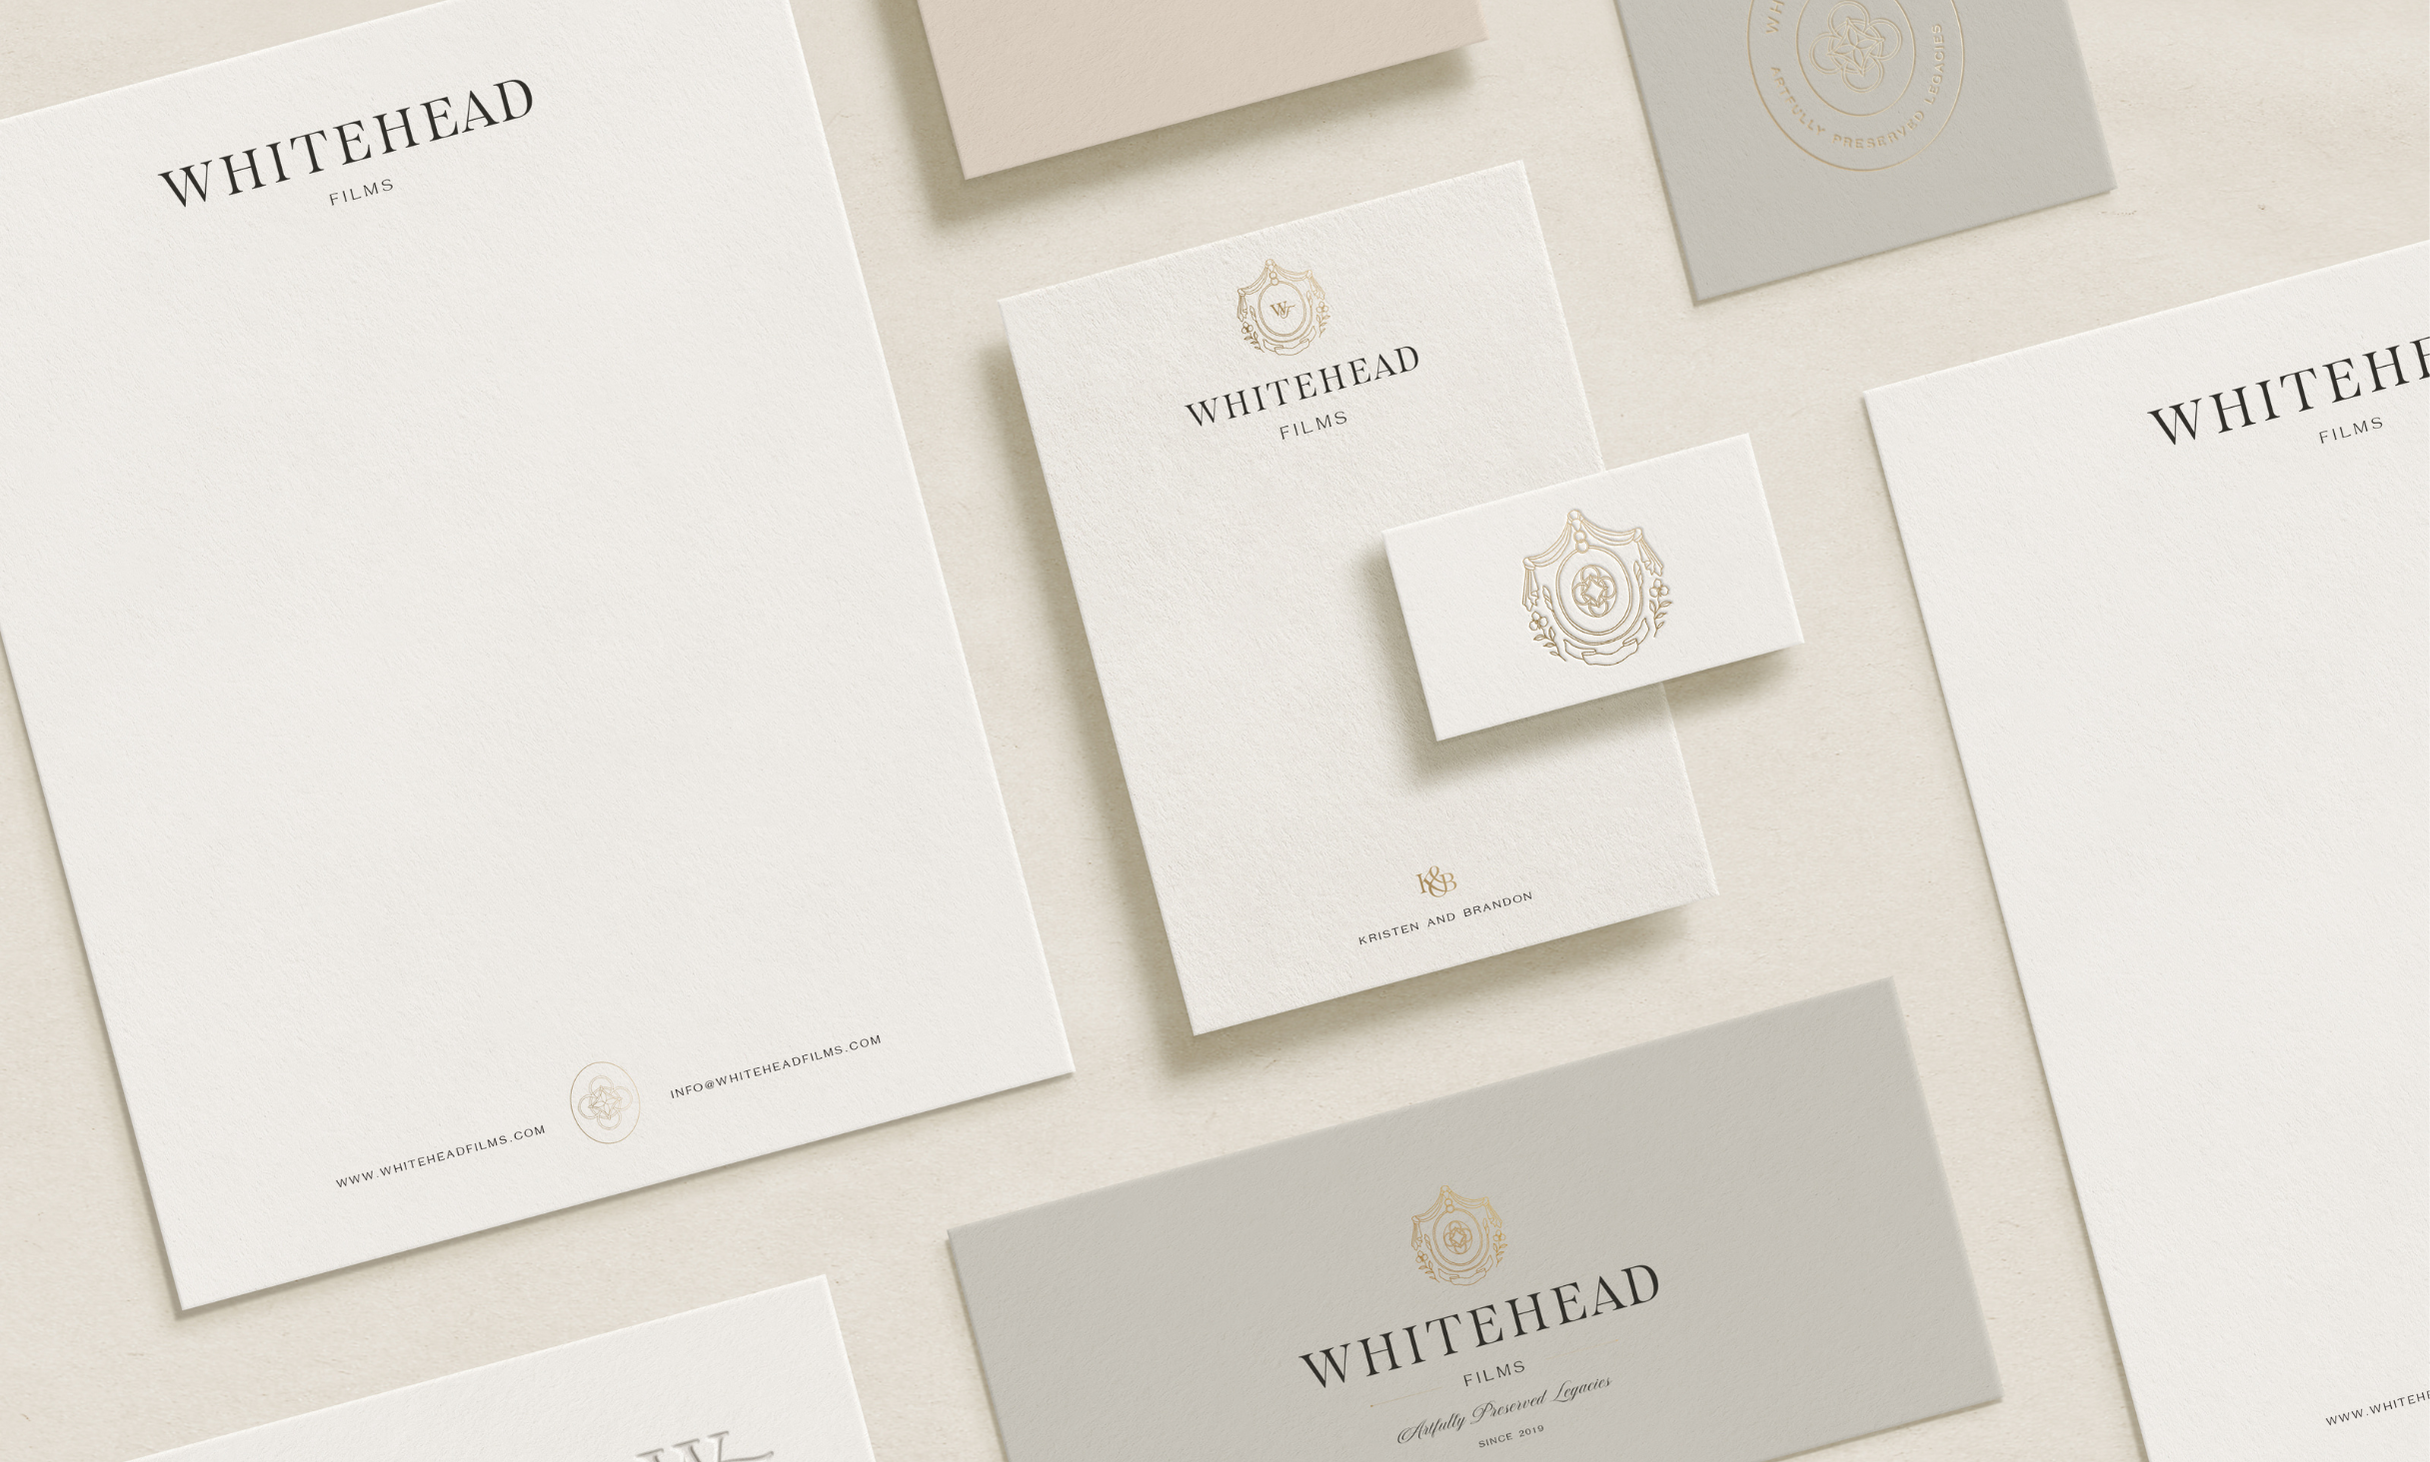 Whitehead Films - Luxury Brand Design for Wedding Videographer Professionals - Sarah Ann Design